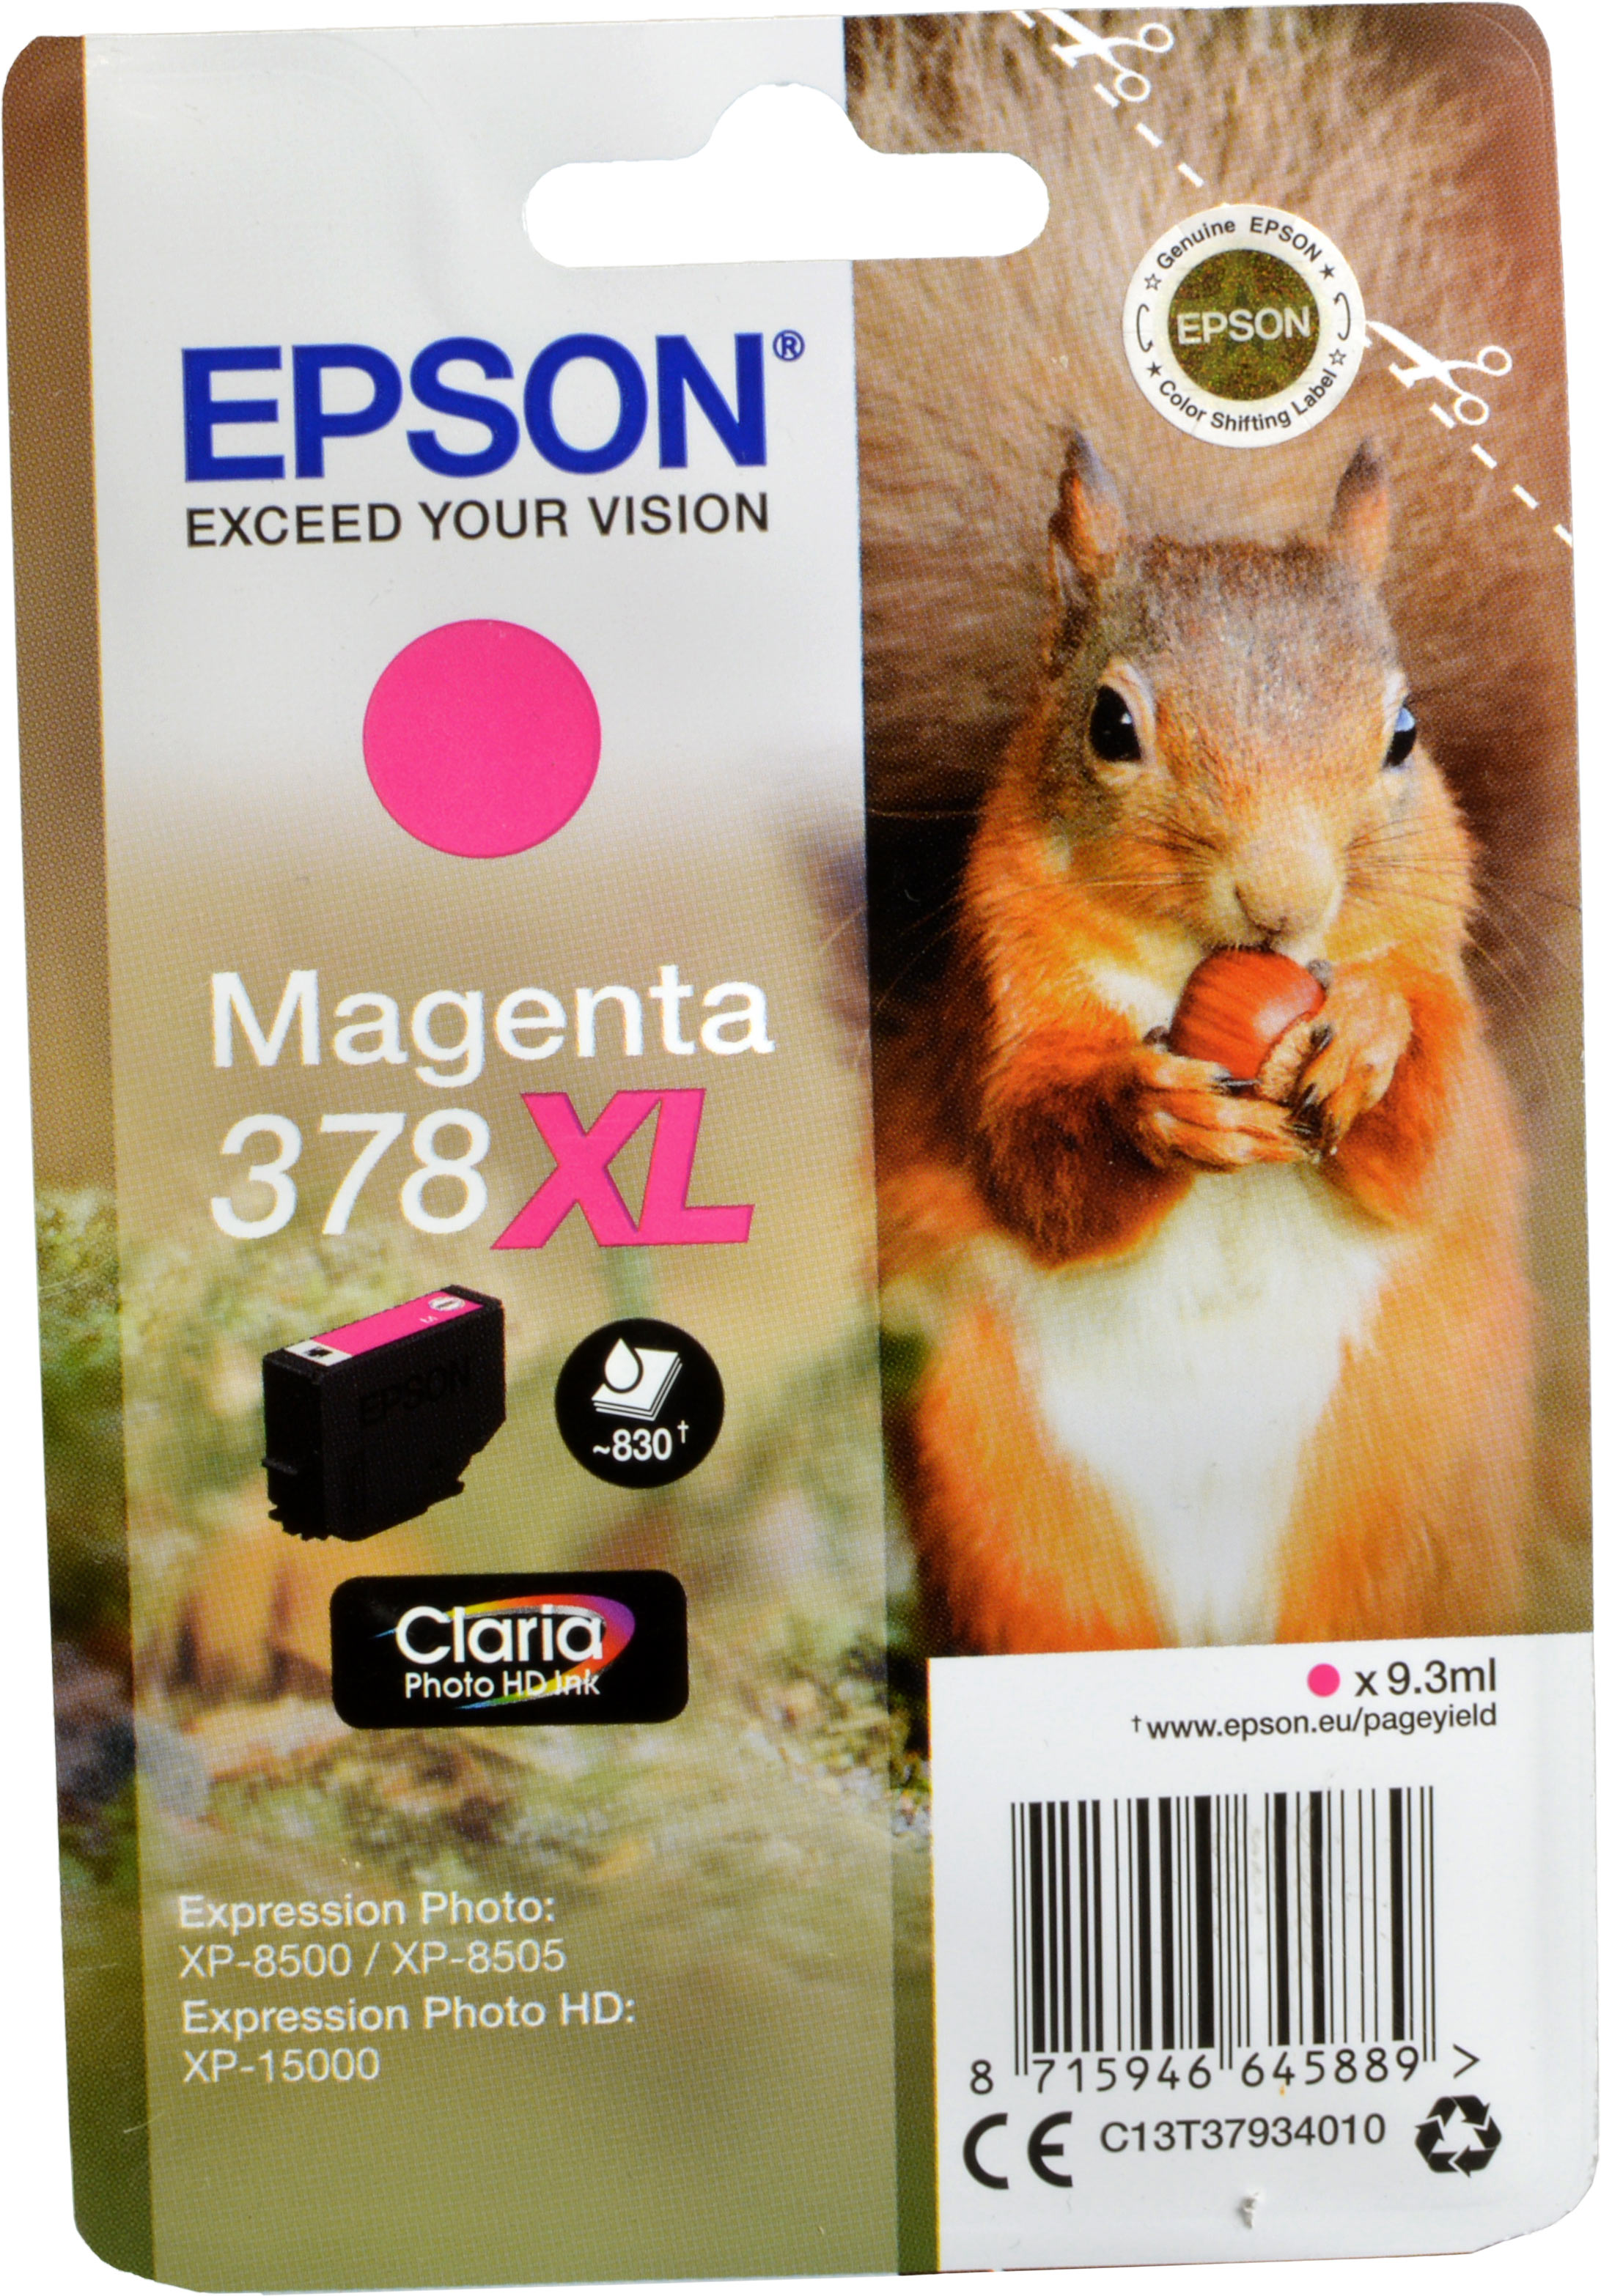 Epson Tinte C13T37934010  Magenta 378XL  magenta